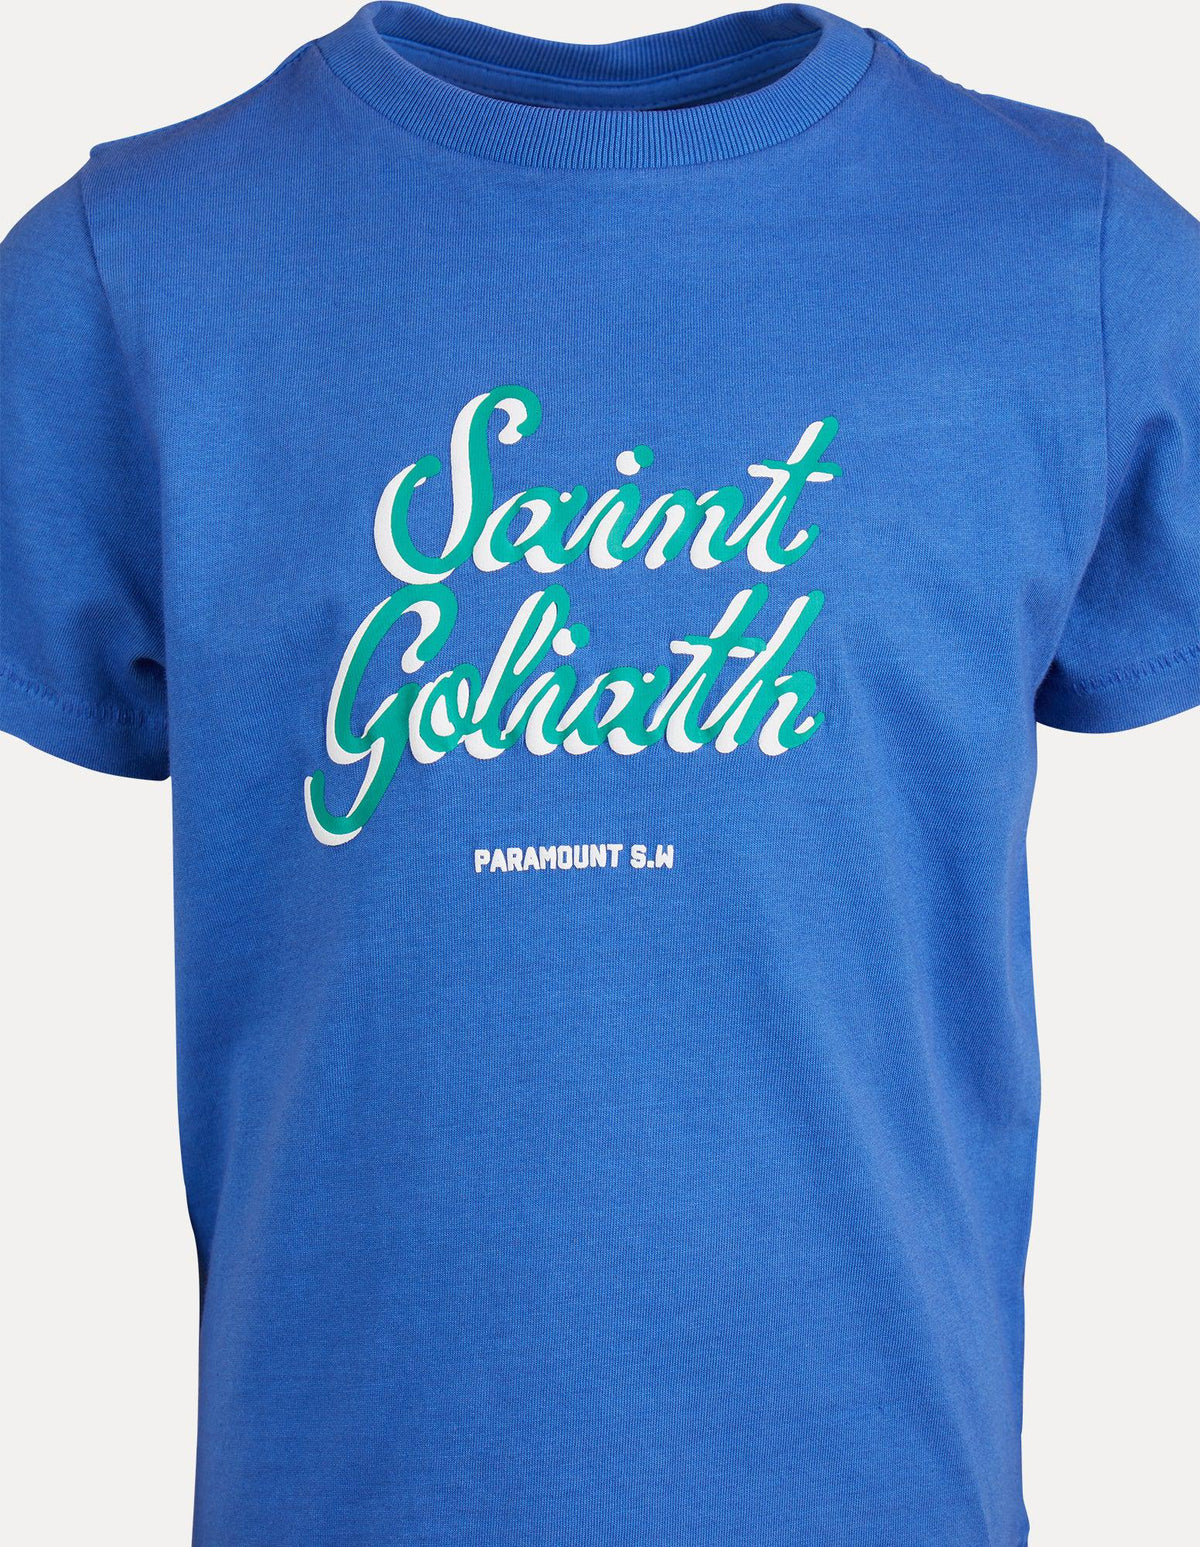 St Goliath 3-7-Legend Tee Cobalt-Edge Clothing